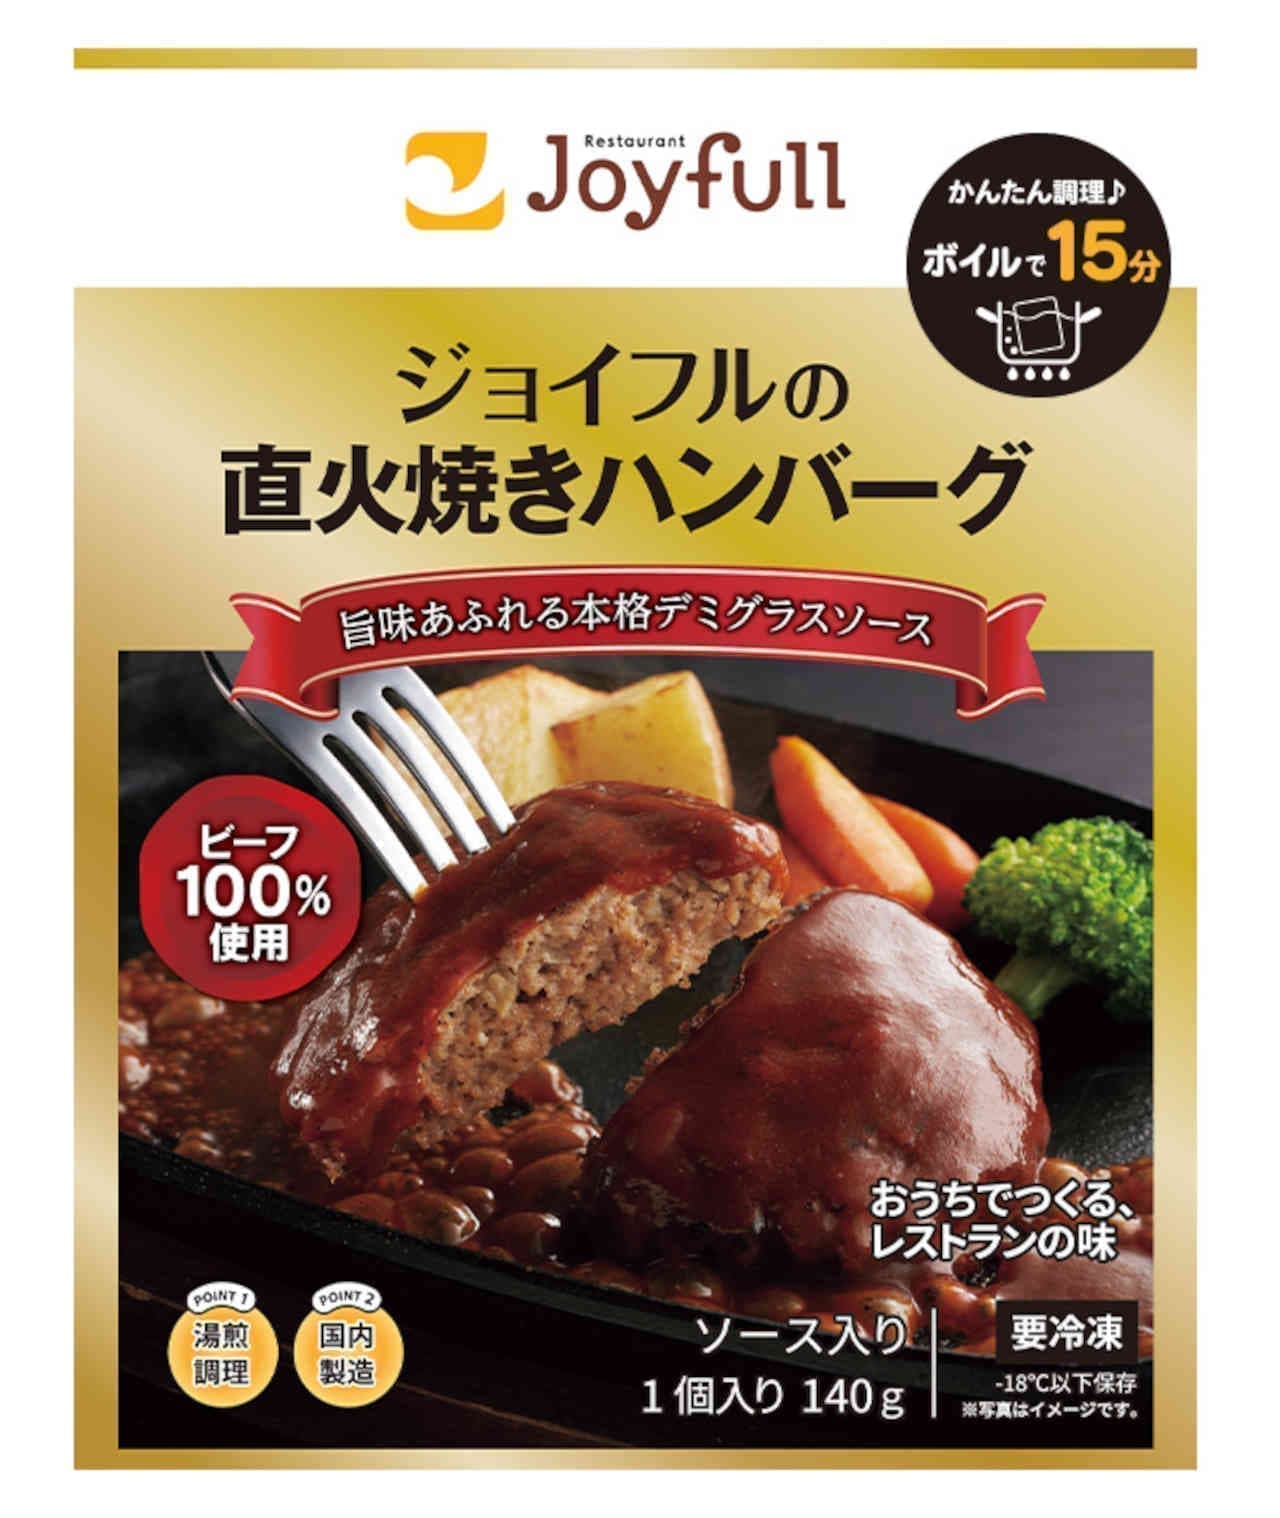 Joyful "Joyful's Open-Fire Grilled Hamburger Steak with Demi-glace Sauce